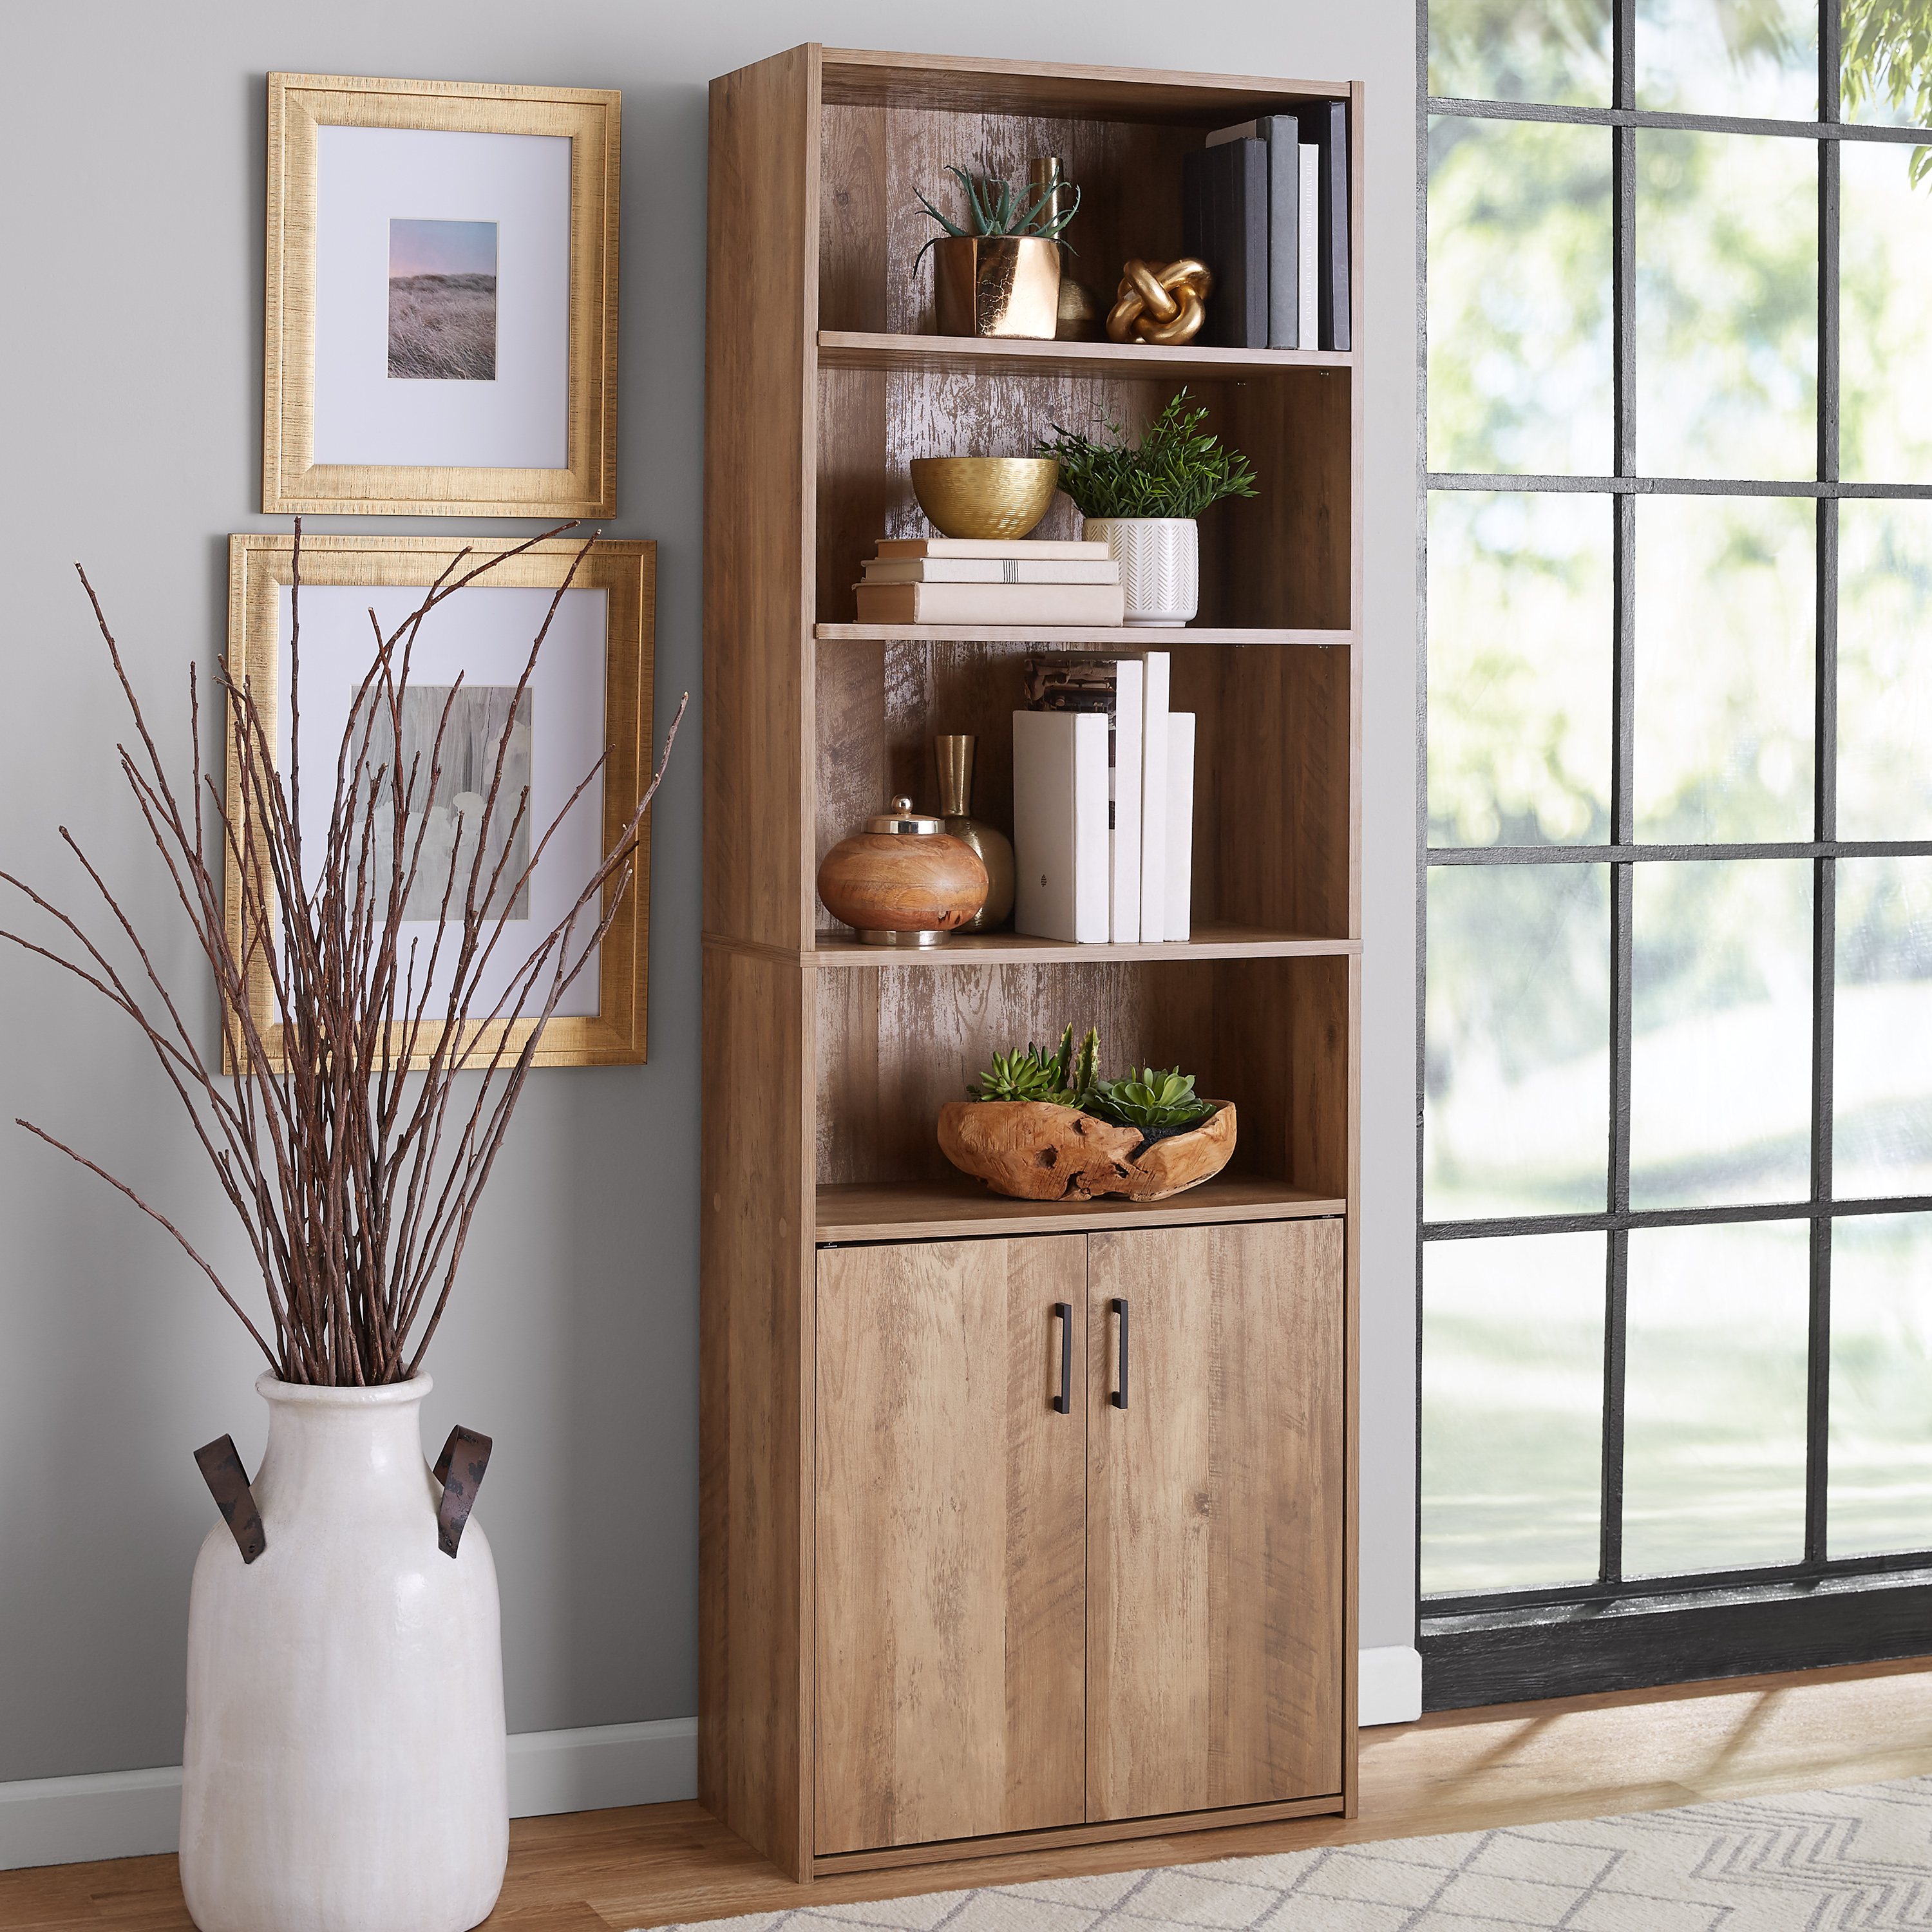 Mainstays Traditional 5 Shelf Bookcase with Doors, Weathered Oak Finish - image 1 of 10